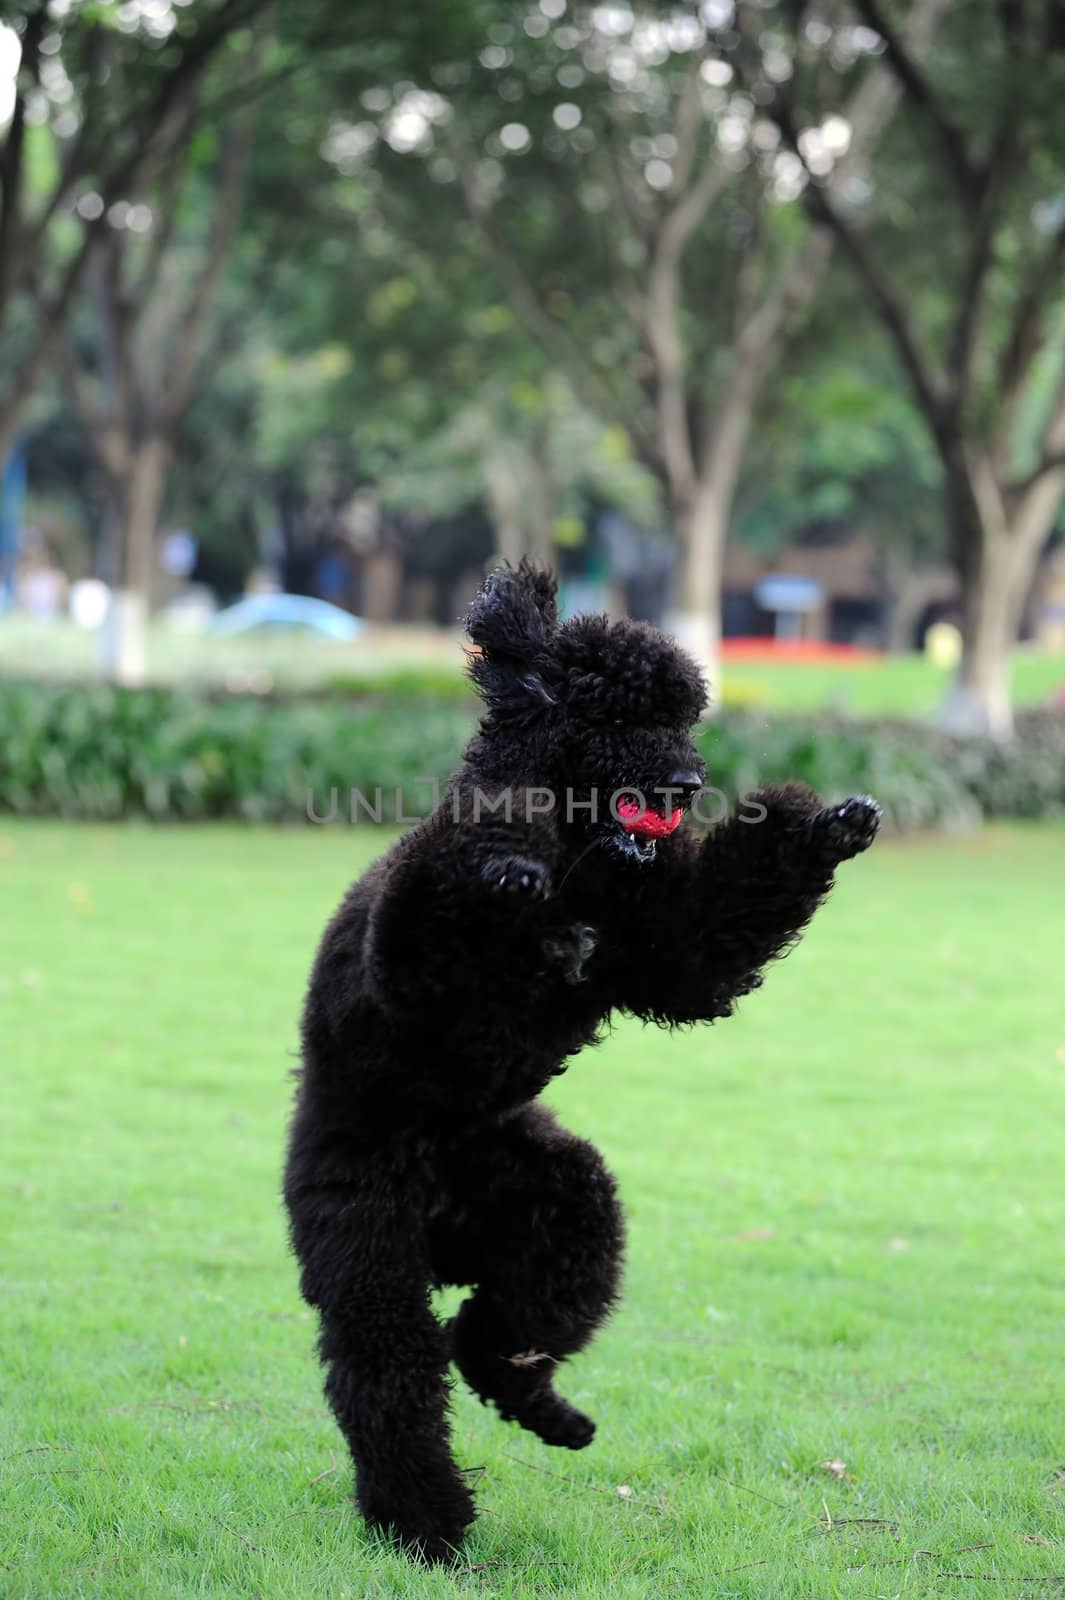 Black poodle dog by raywoo